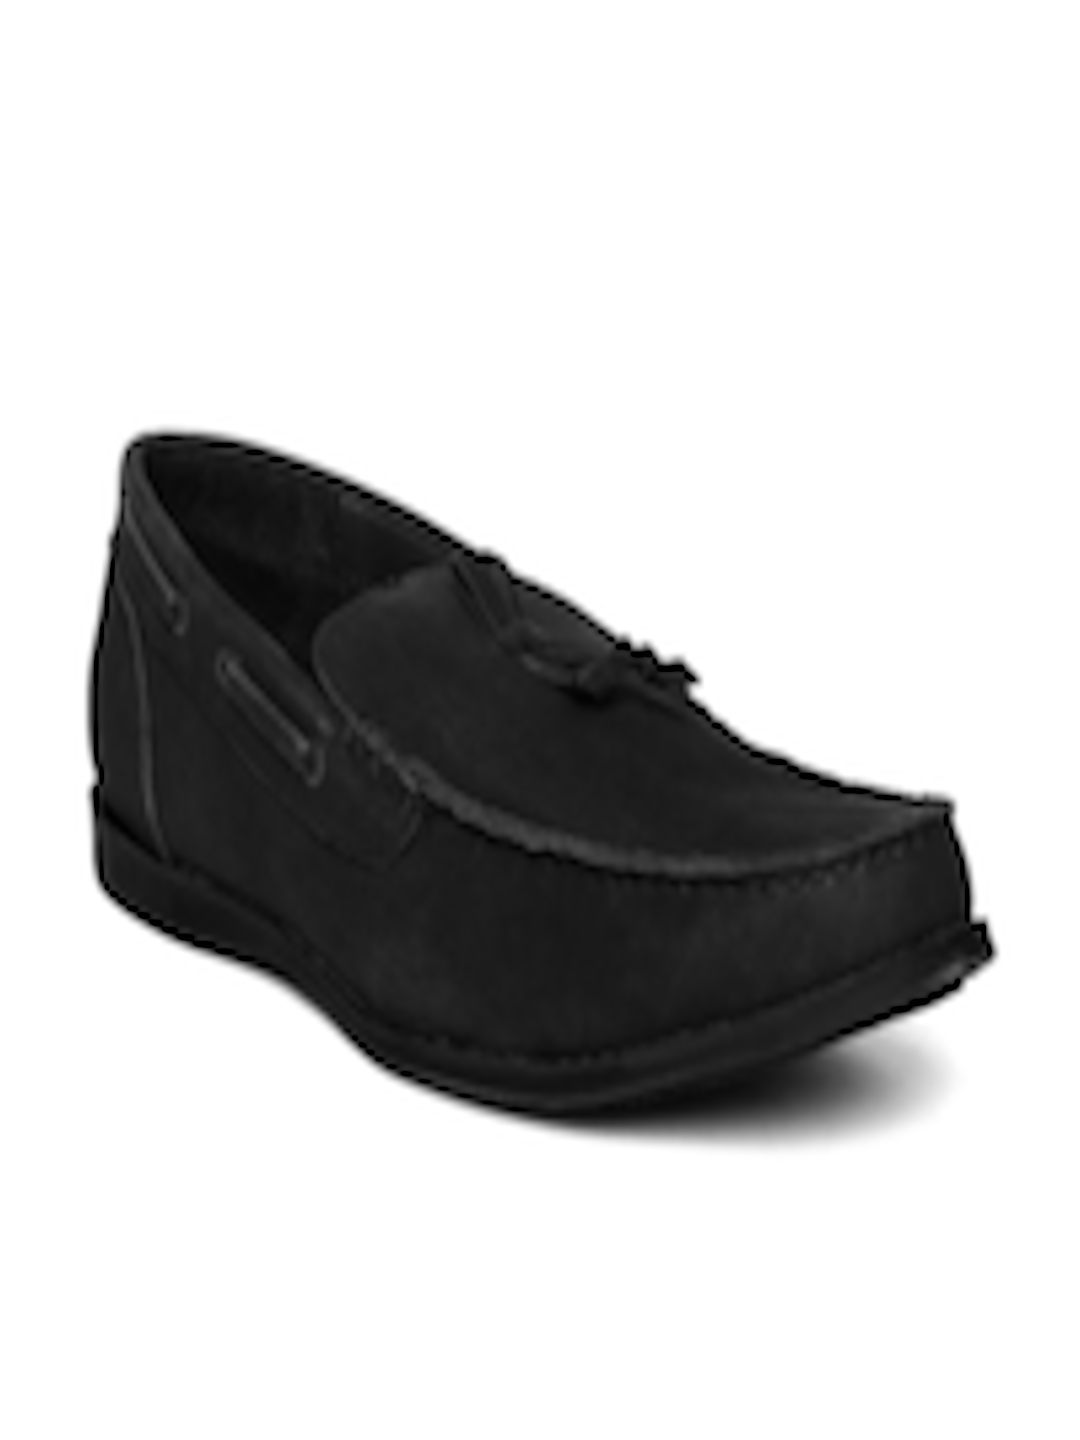 Buy Mast & Harbour Men Black Leather Boat Shoes - Casual Shoes for Men ...